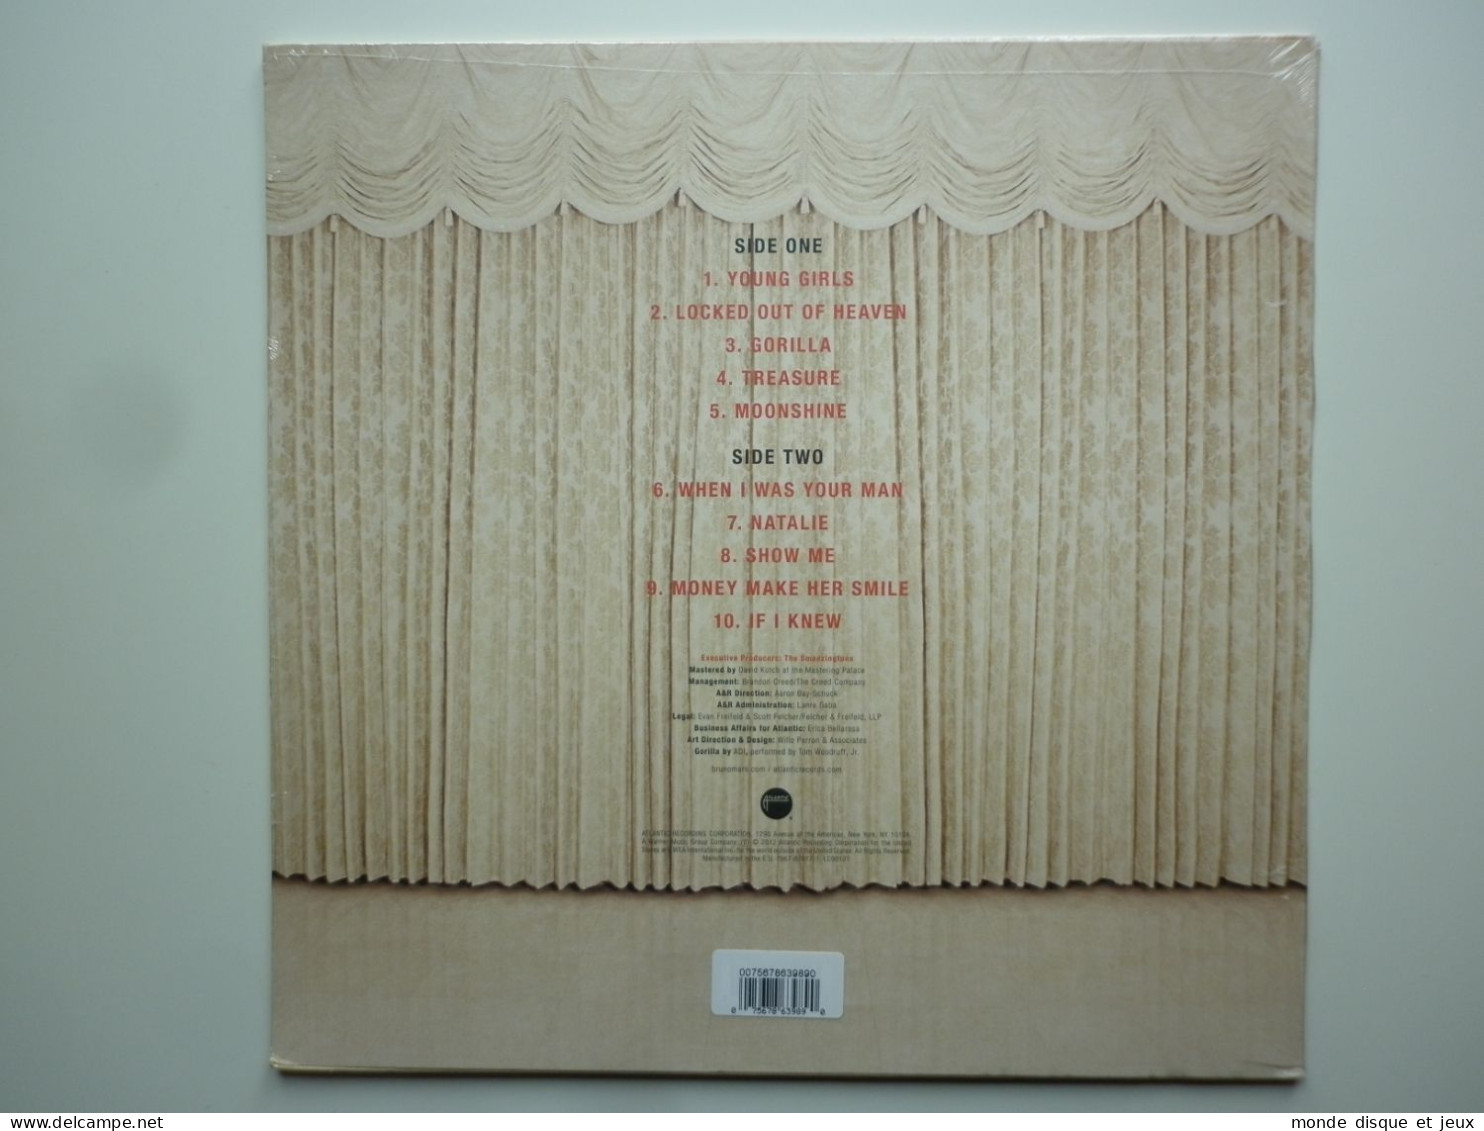 Bruno Mars Album 33Tours Vinyle Unorthodox Jukebox Couleur Rouge / Red - Andere - Franstalig